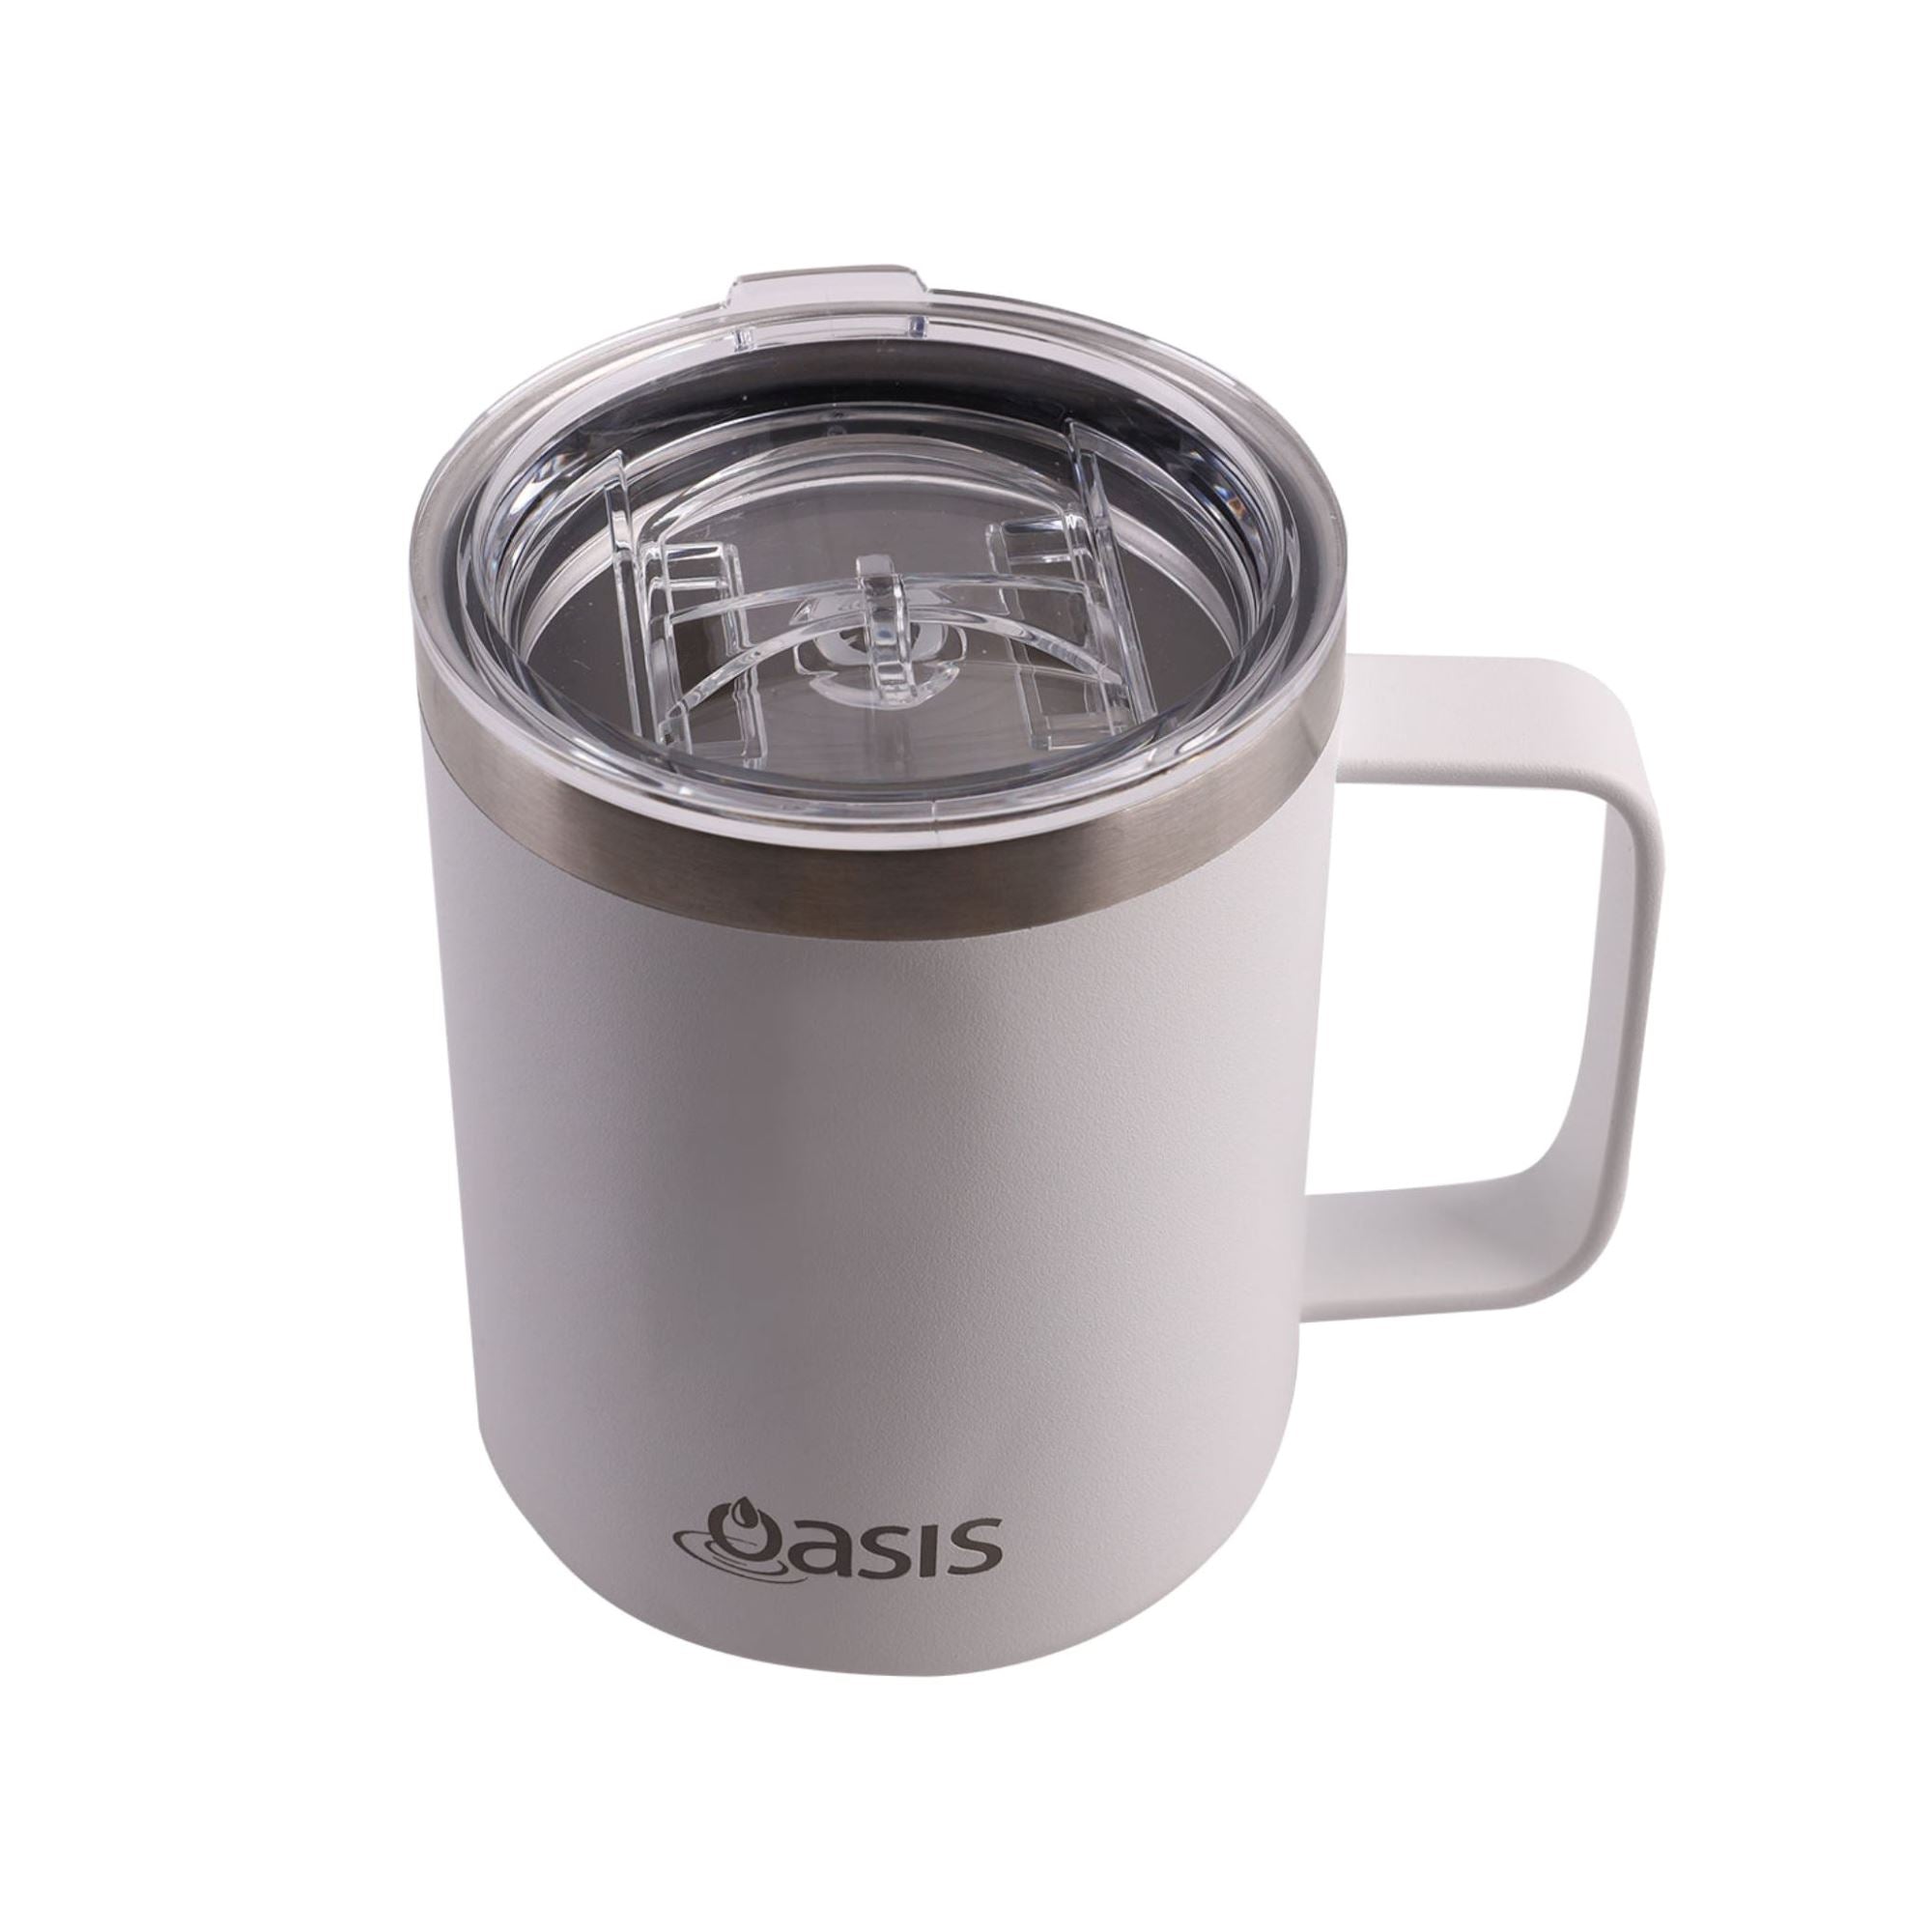 Oasis Stainless Steel Insulated Explorer Mug 400ml - White Insulated Mug Oasis 